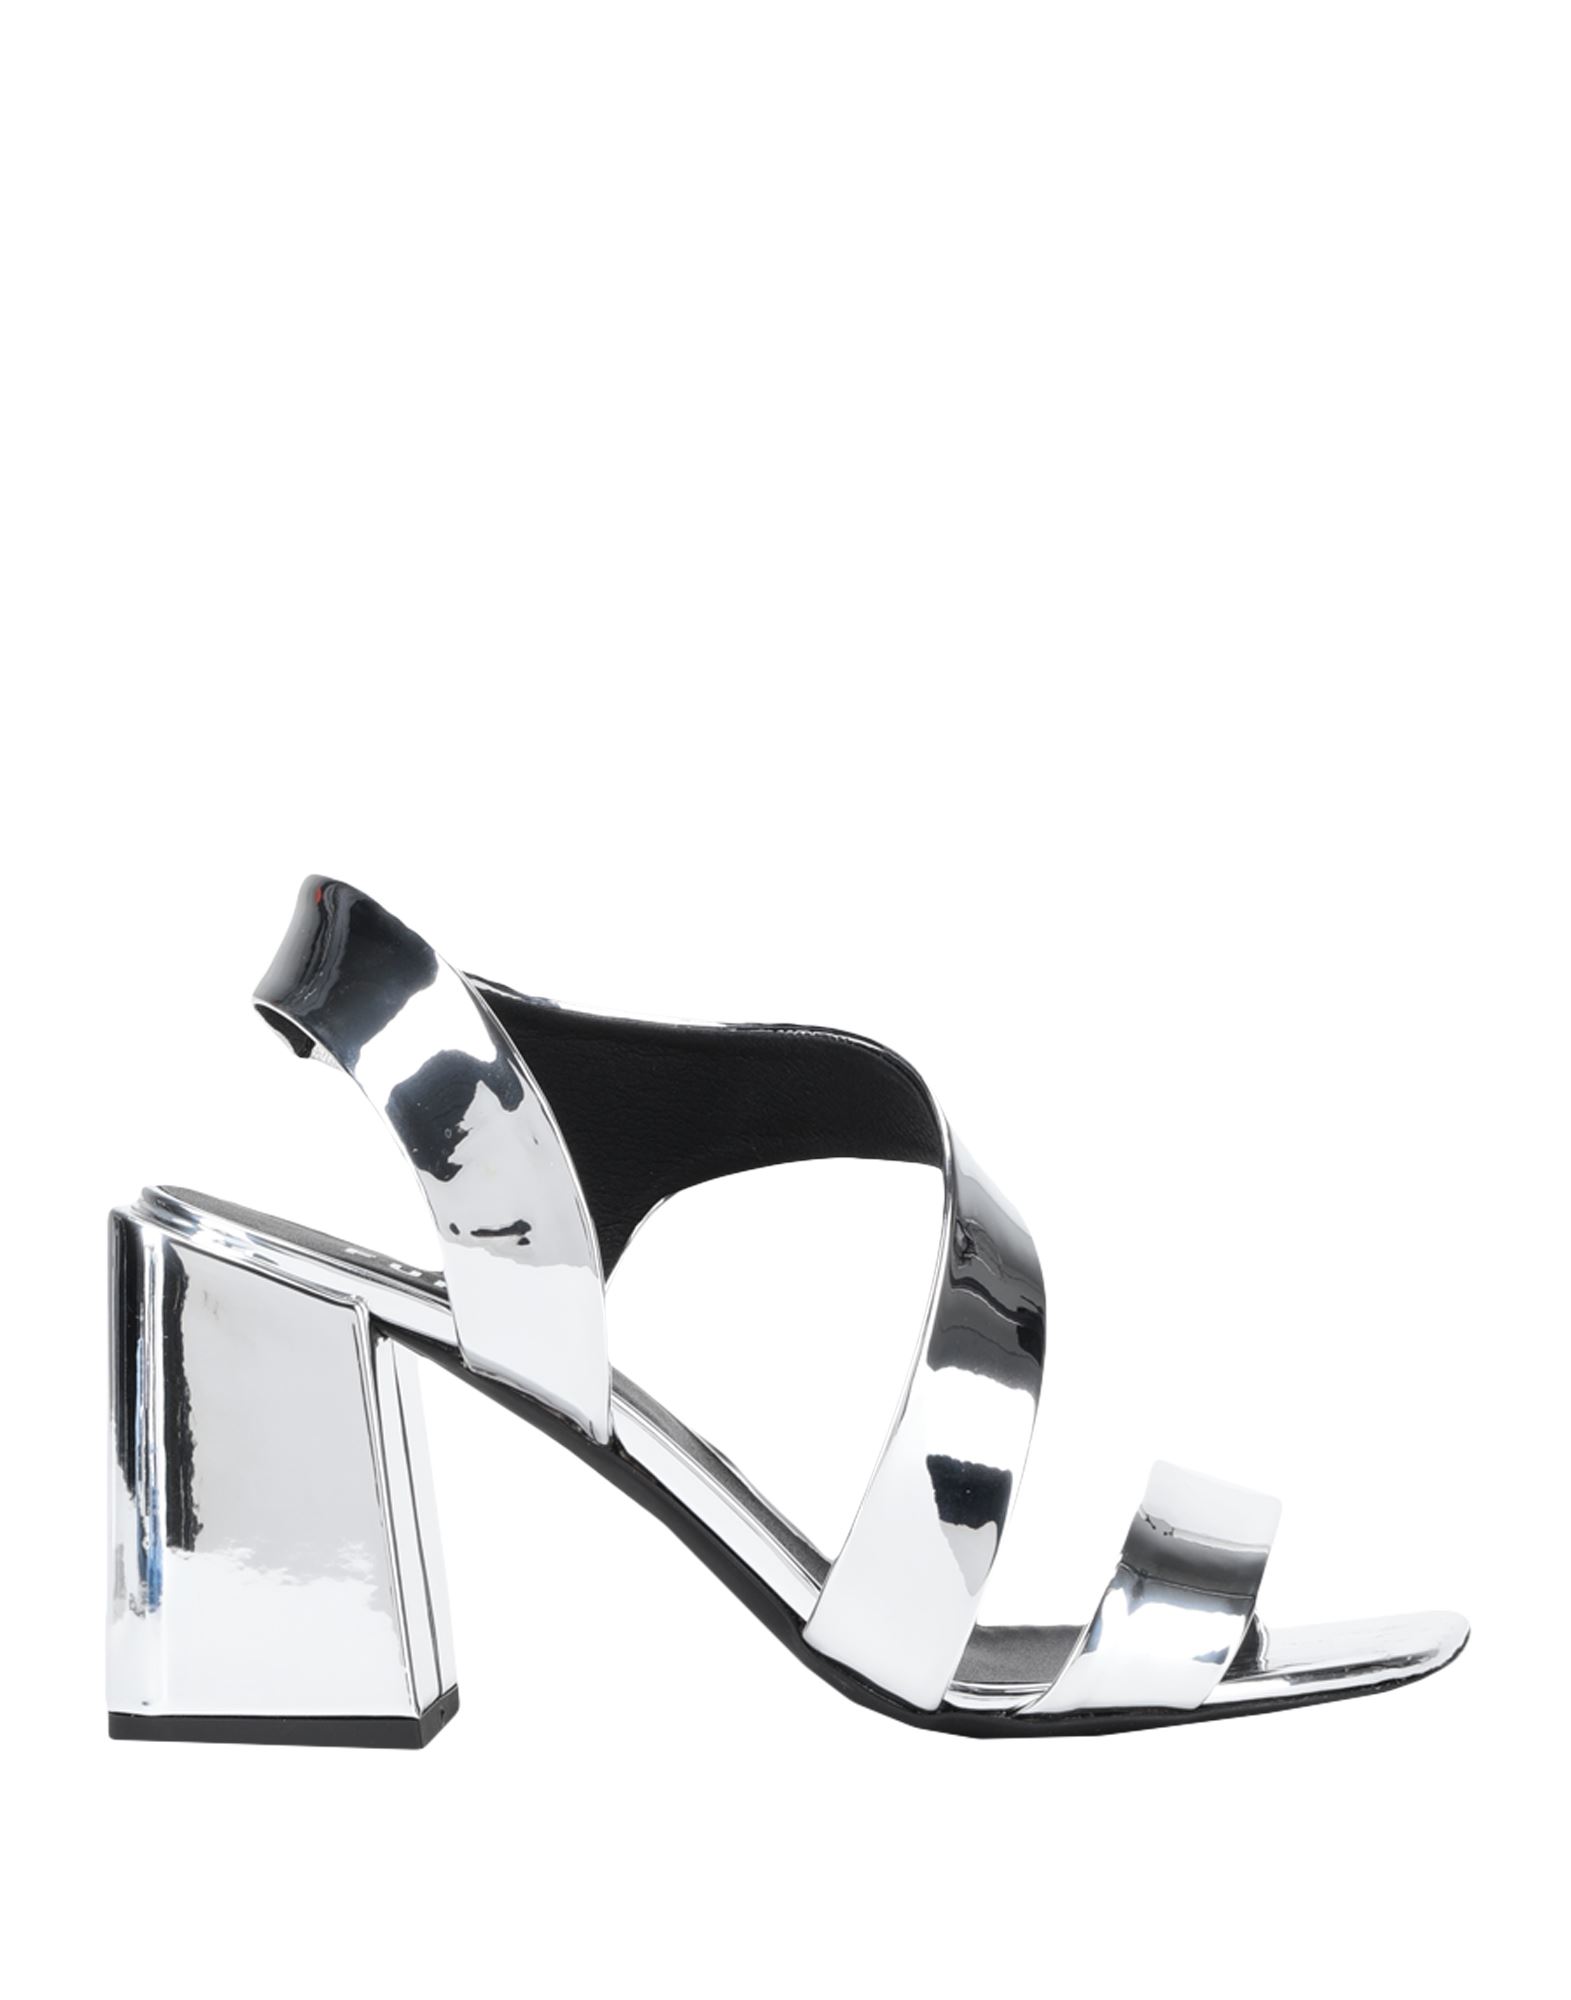 Furla Sandals In Silver